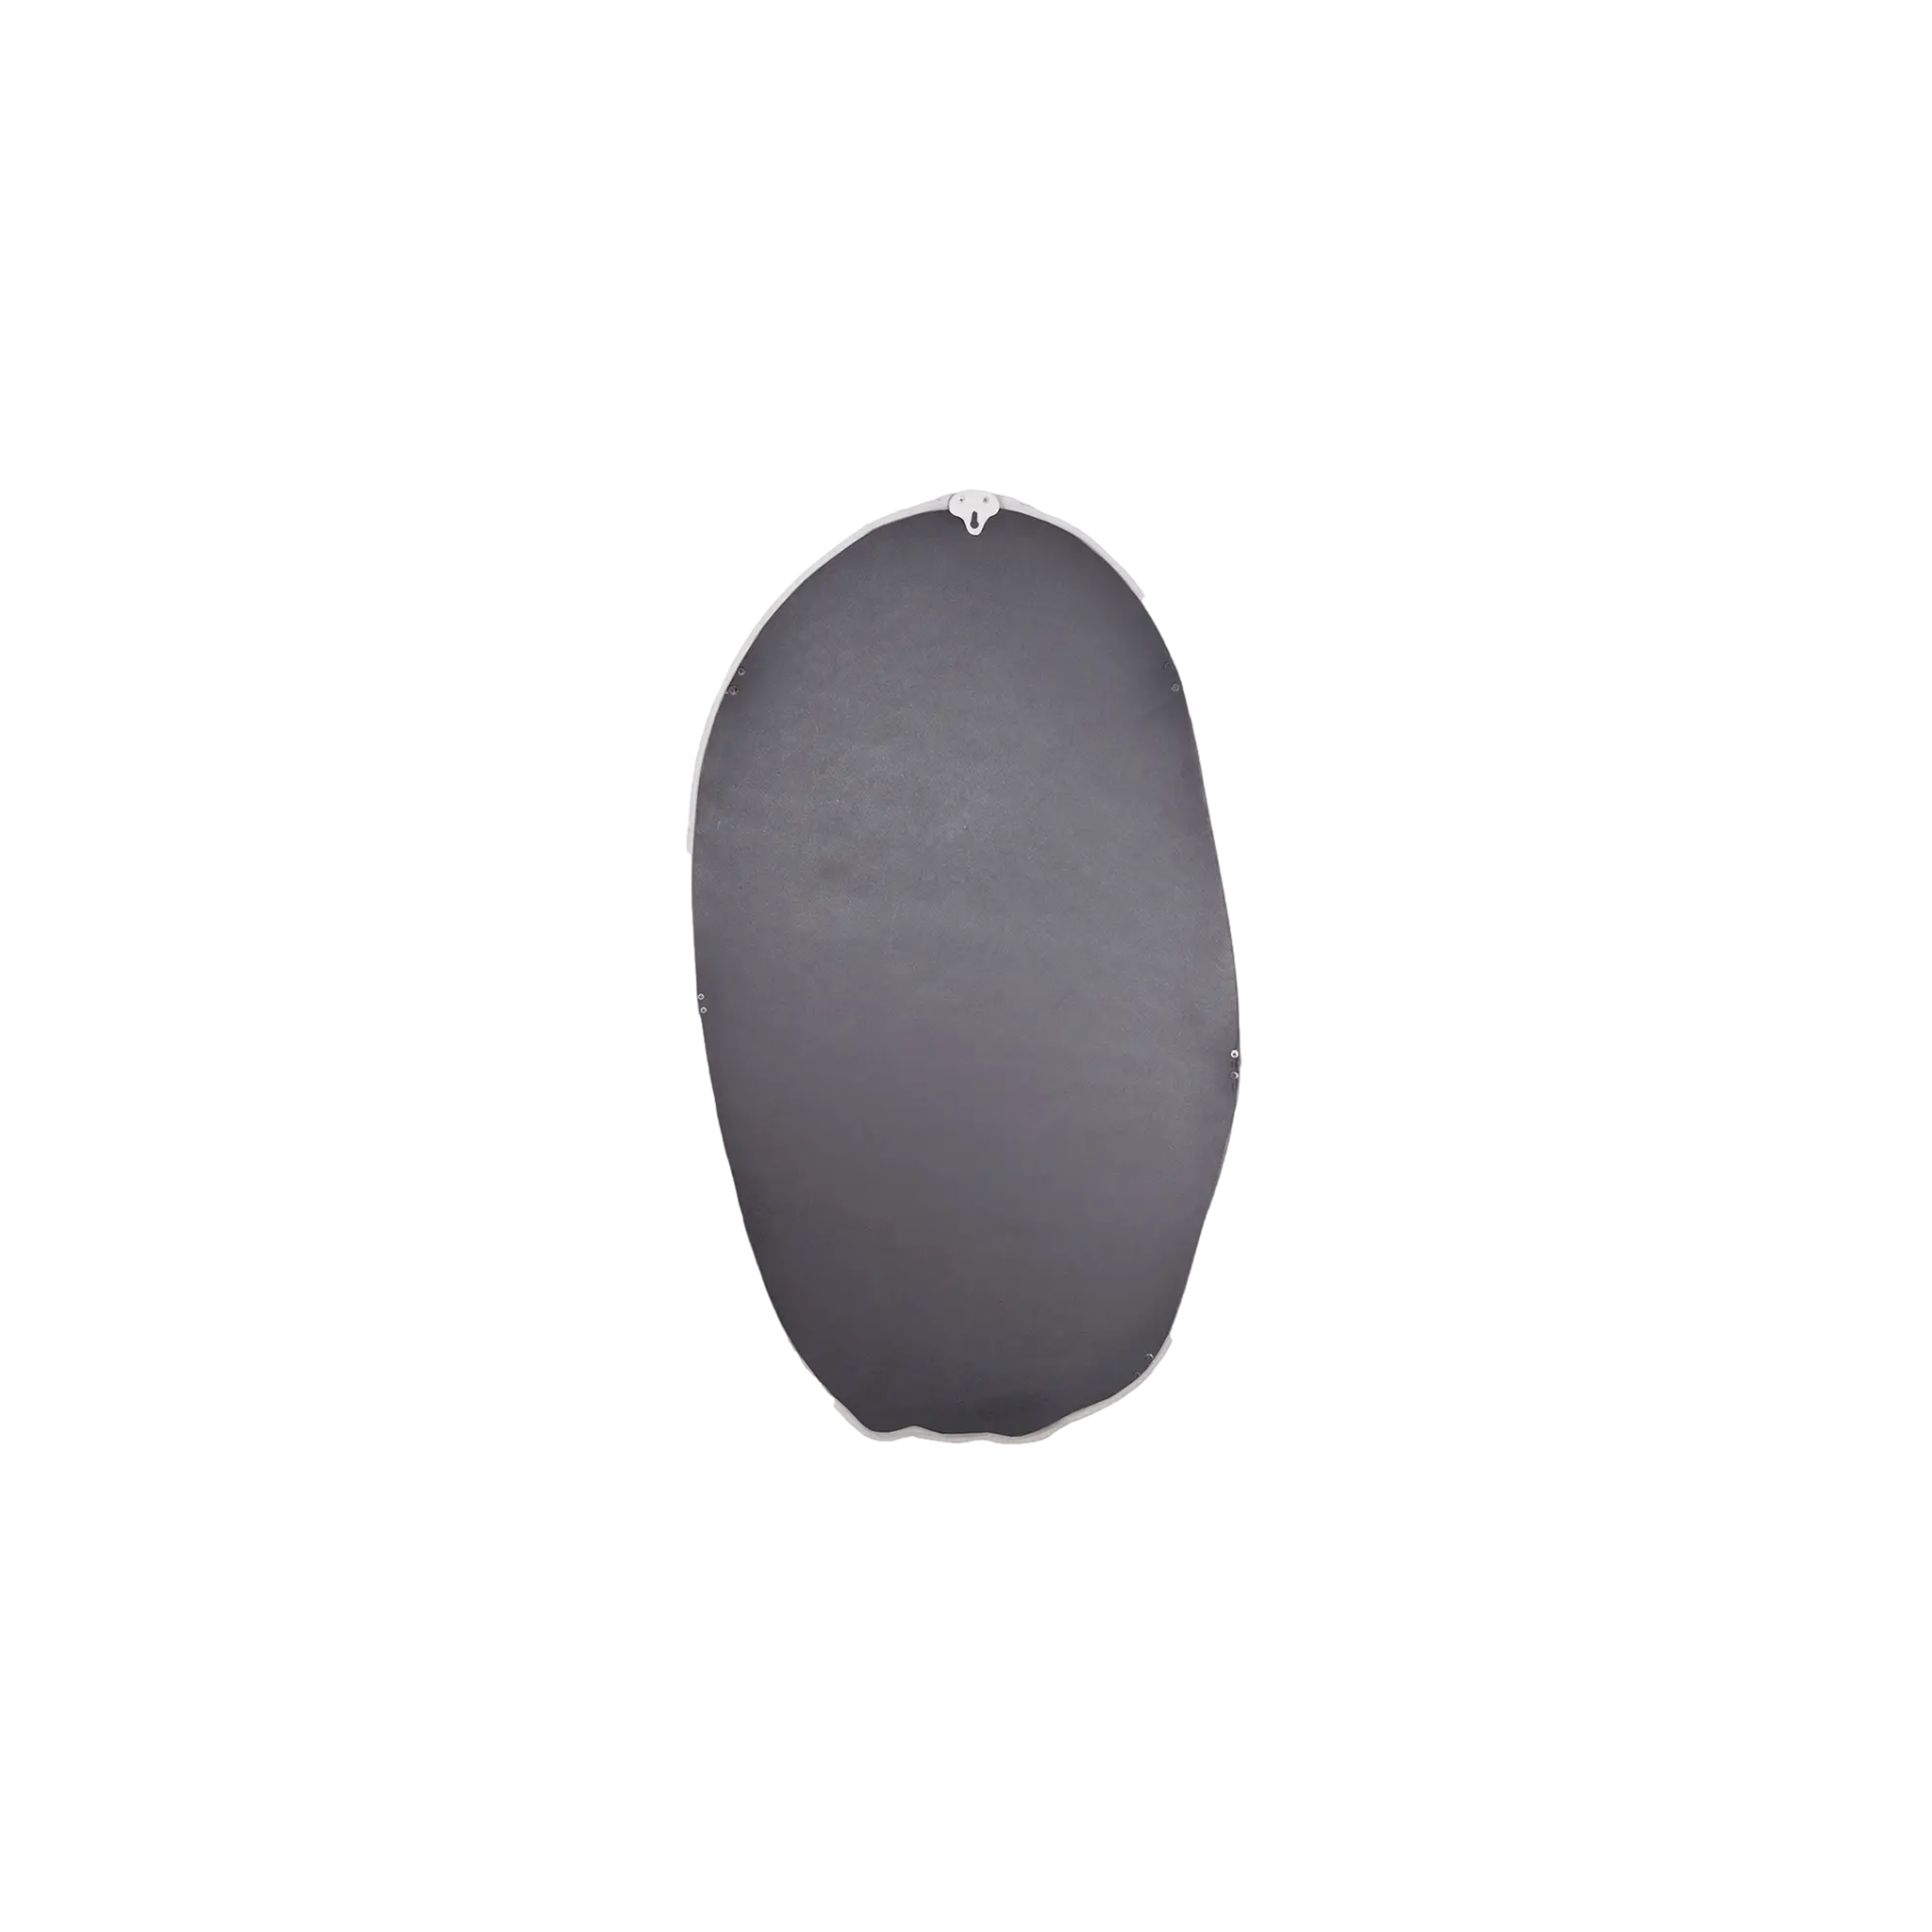 Foundry Oval Mirror (White)